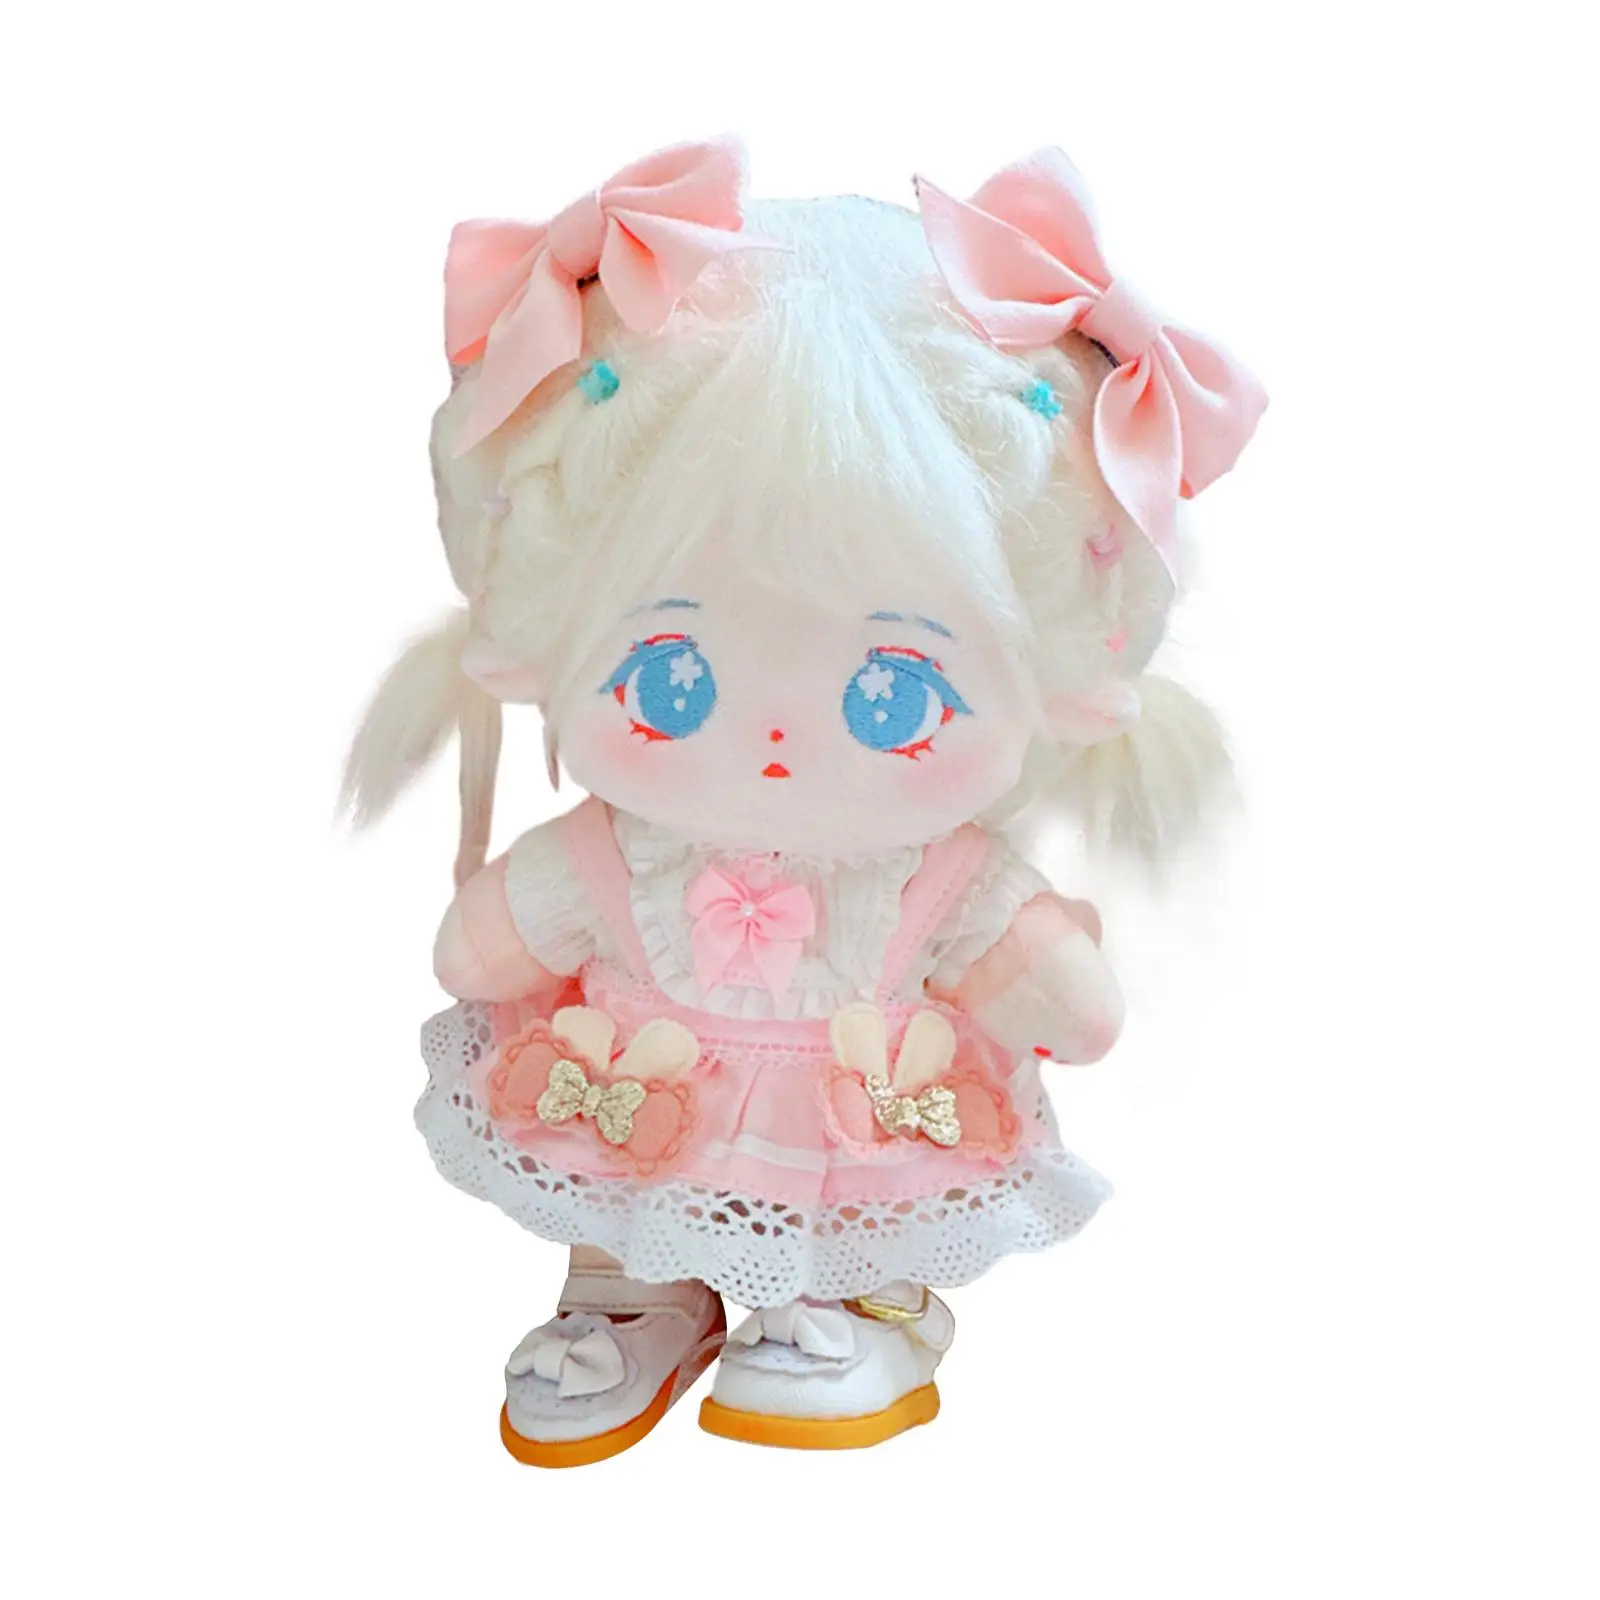 Miniature Pocket Dolls, Little Dolls, Blue Eyeballs Cute Surprise Face Girls, Mini Dolls for Girls, Mini Dolls